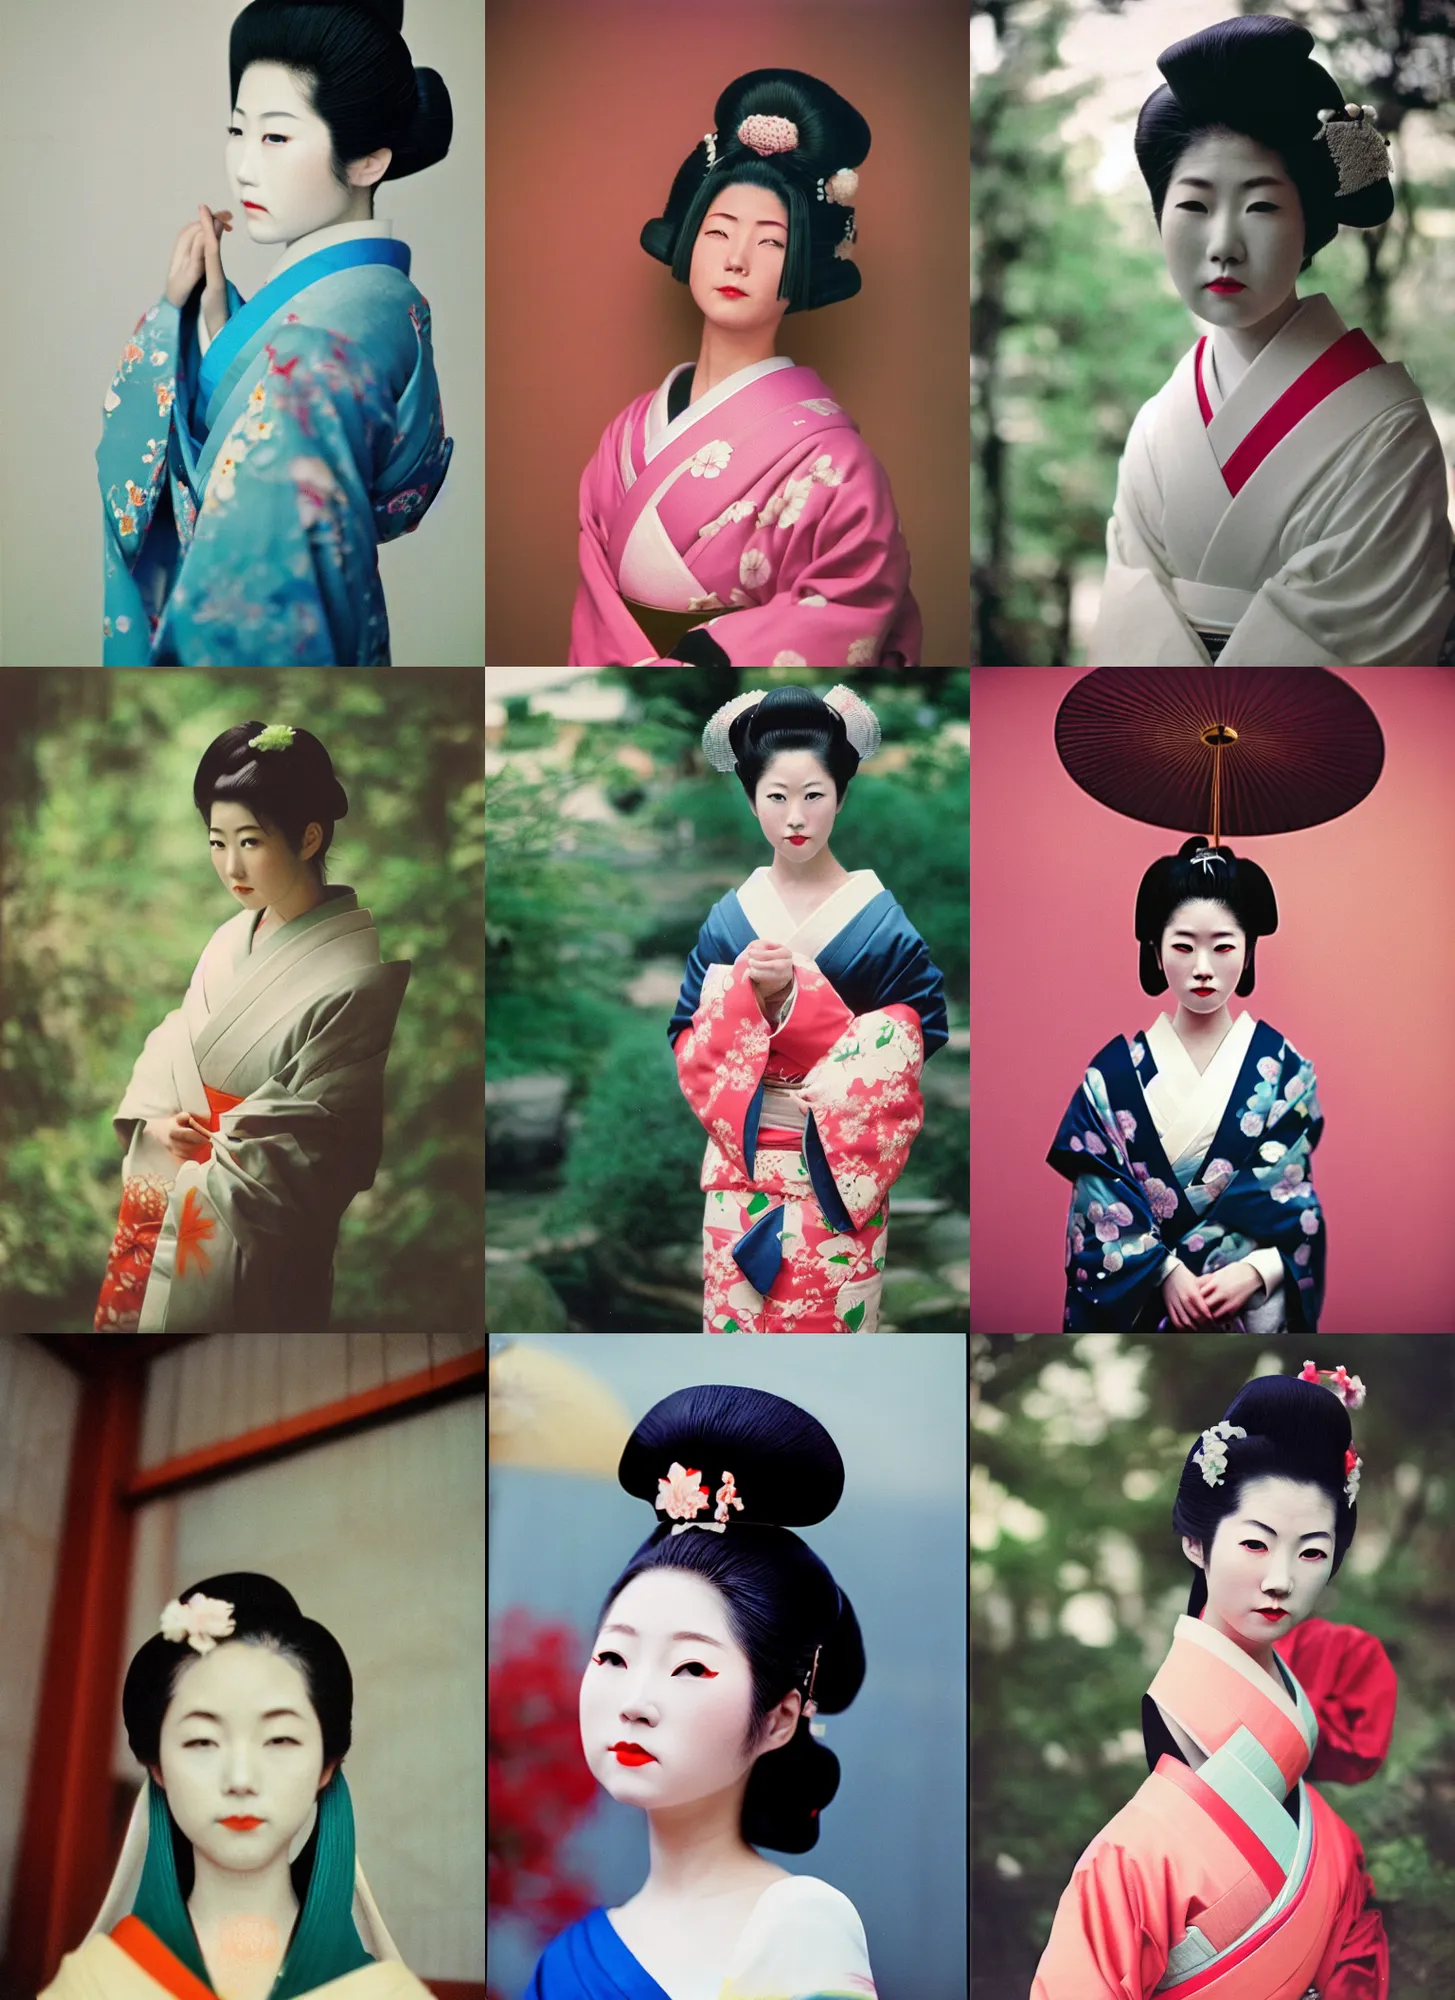 Prompt: Portrait Photograph of a Japanese Geisha Ektachrome 100